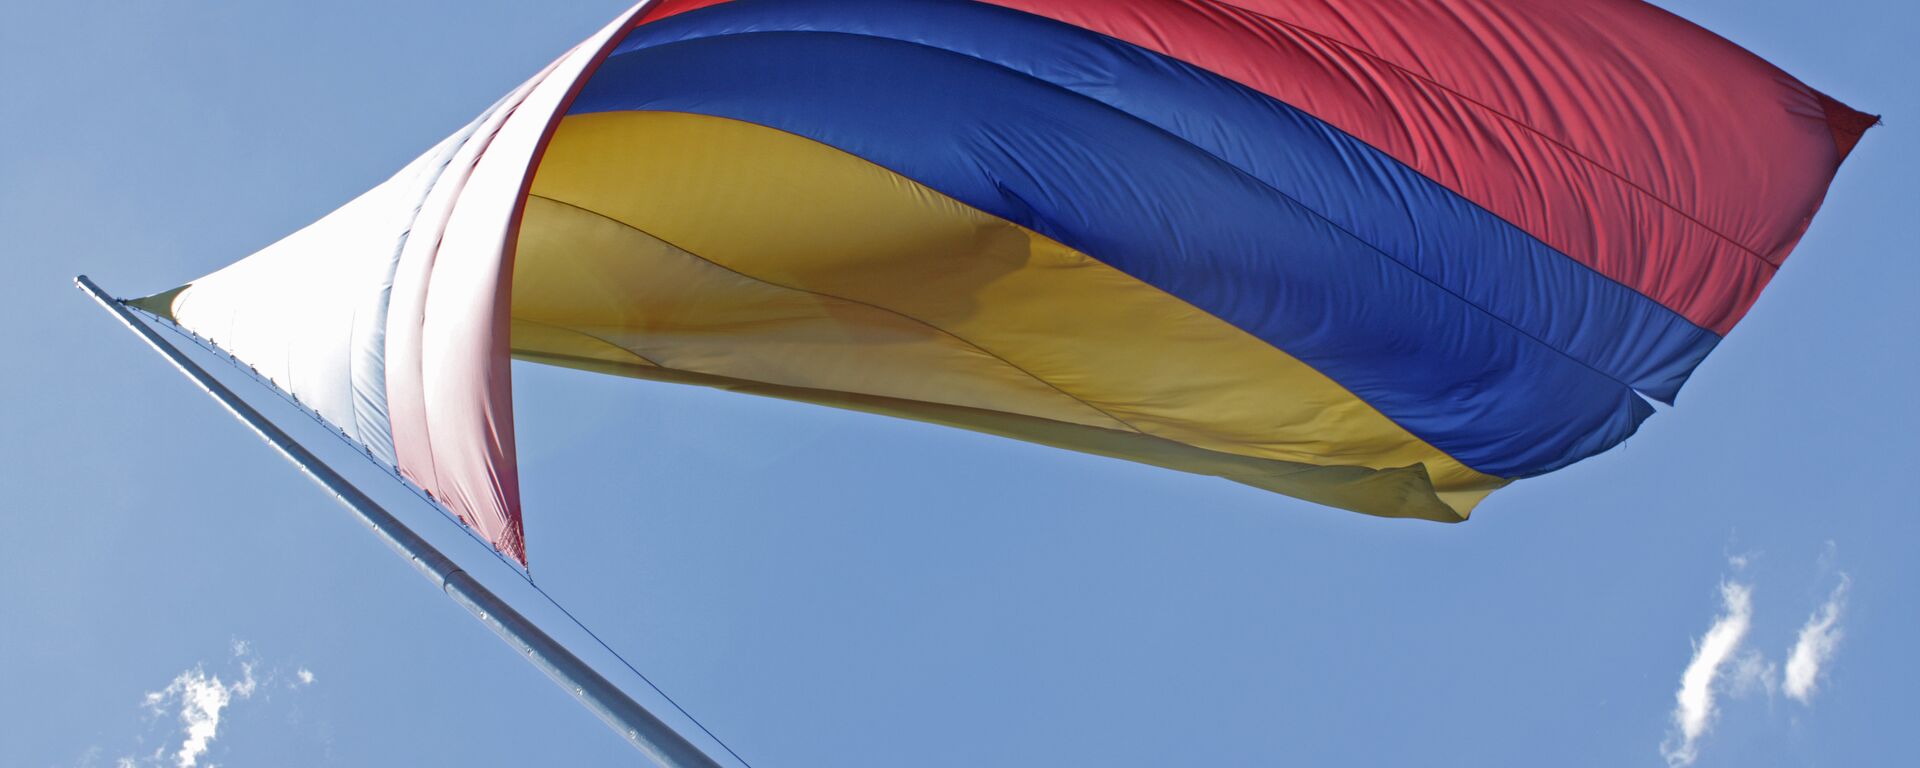 Bandera de Colombia - Sputnik Mundo, 1920, 24.03.2021